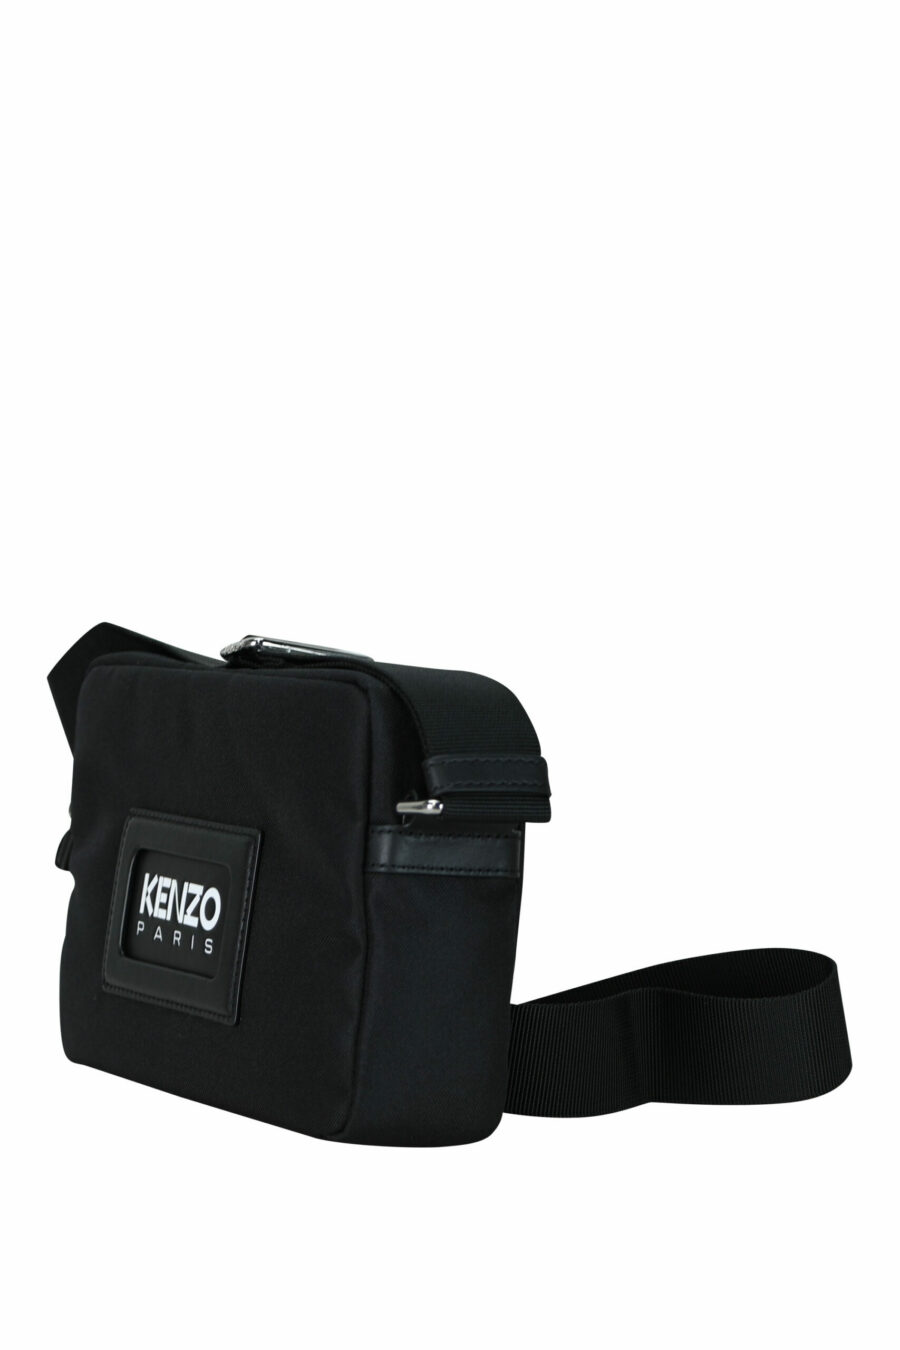 Black crossbody bag with "kenzography" logo - 3612230580084 1 scaled